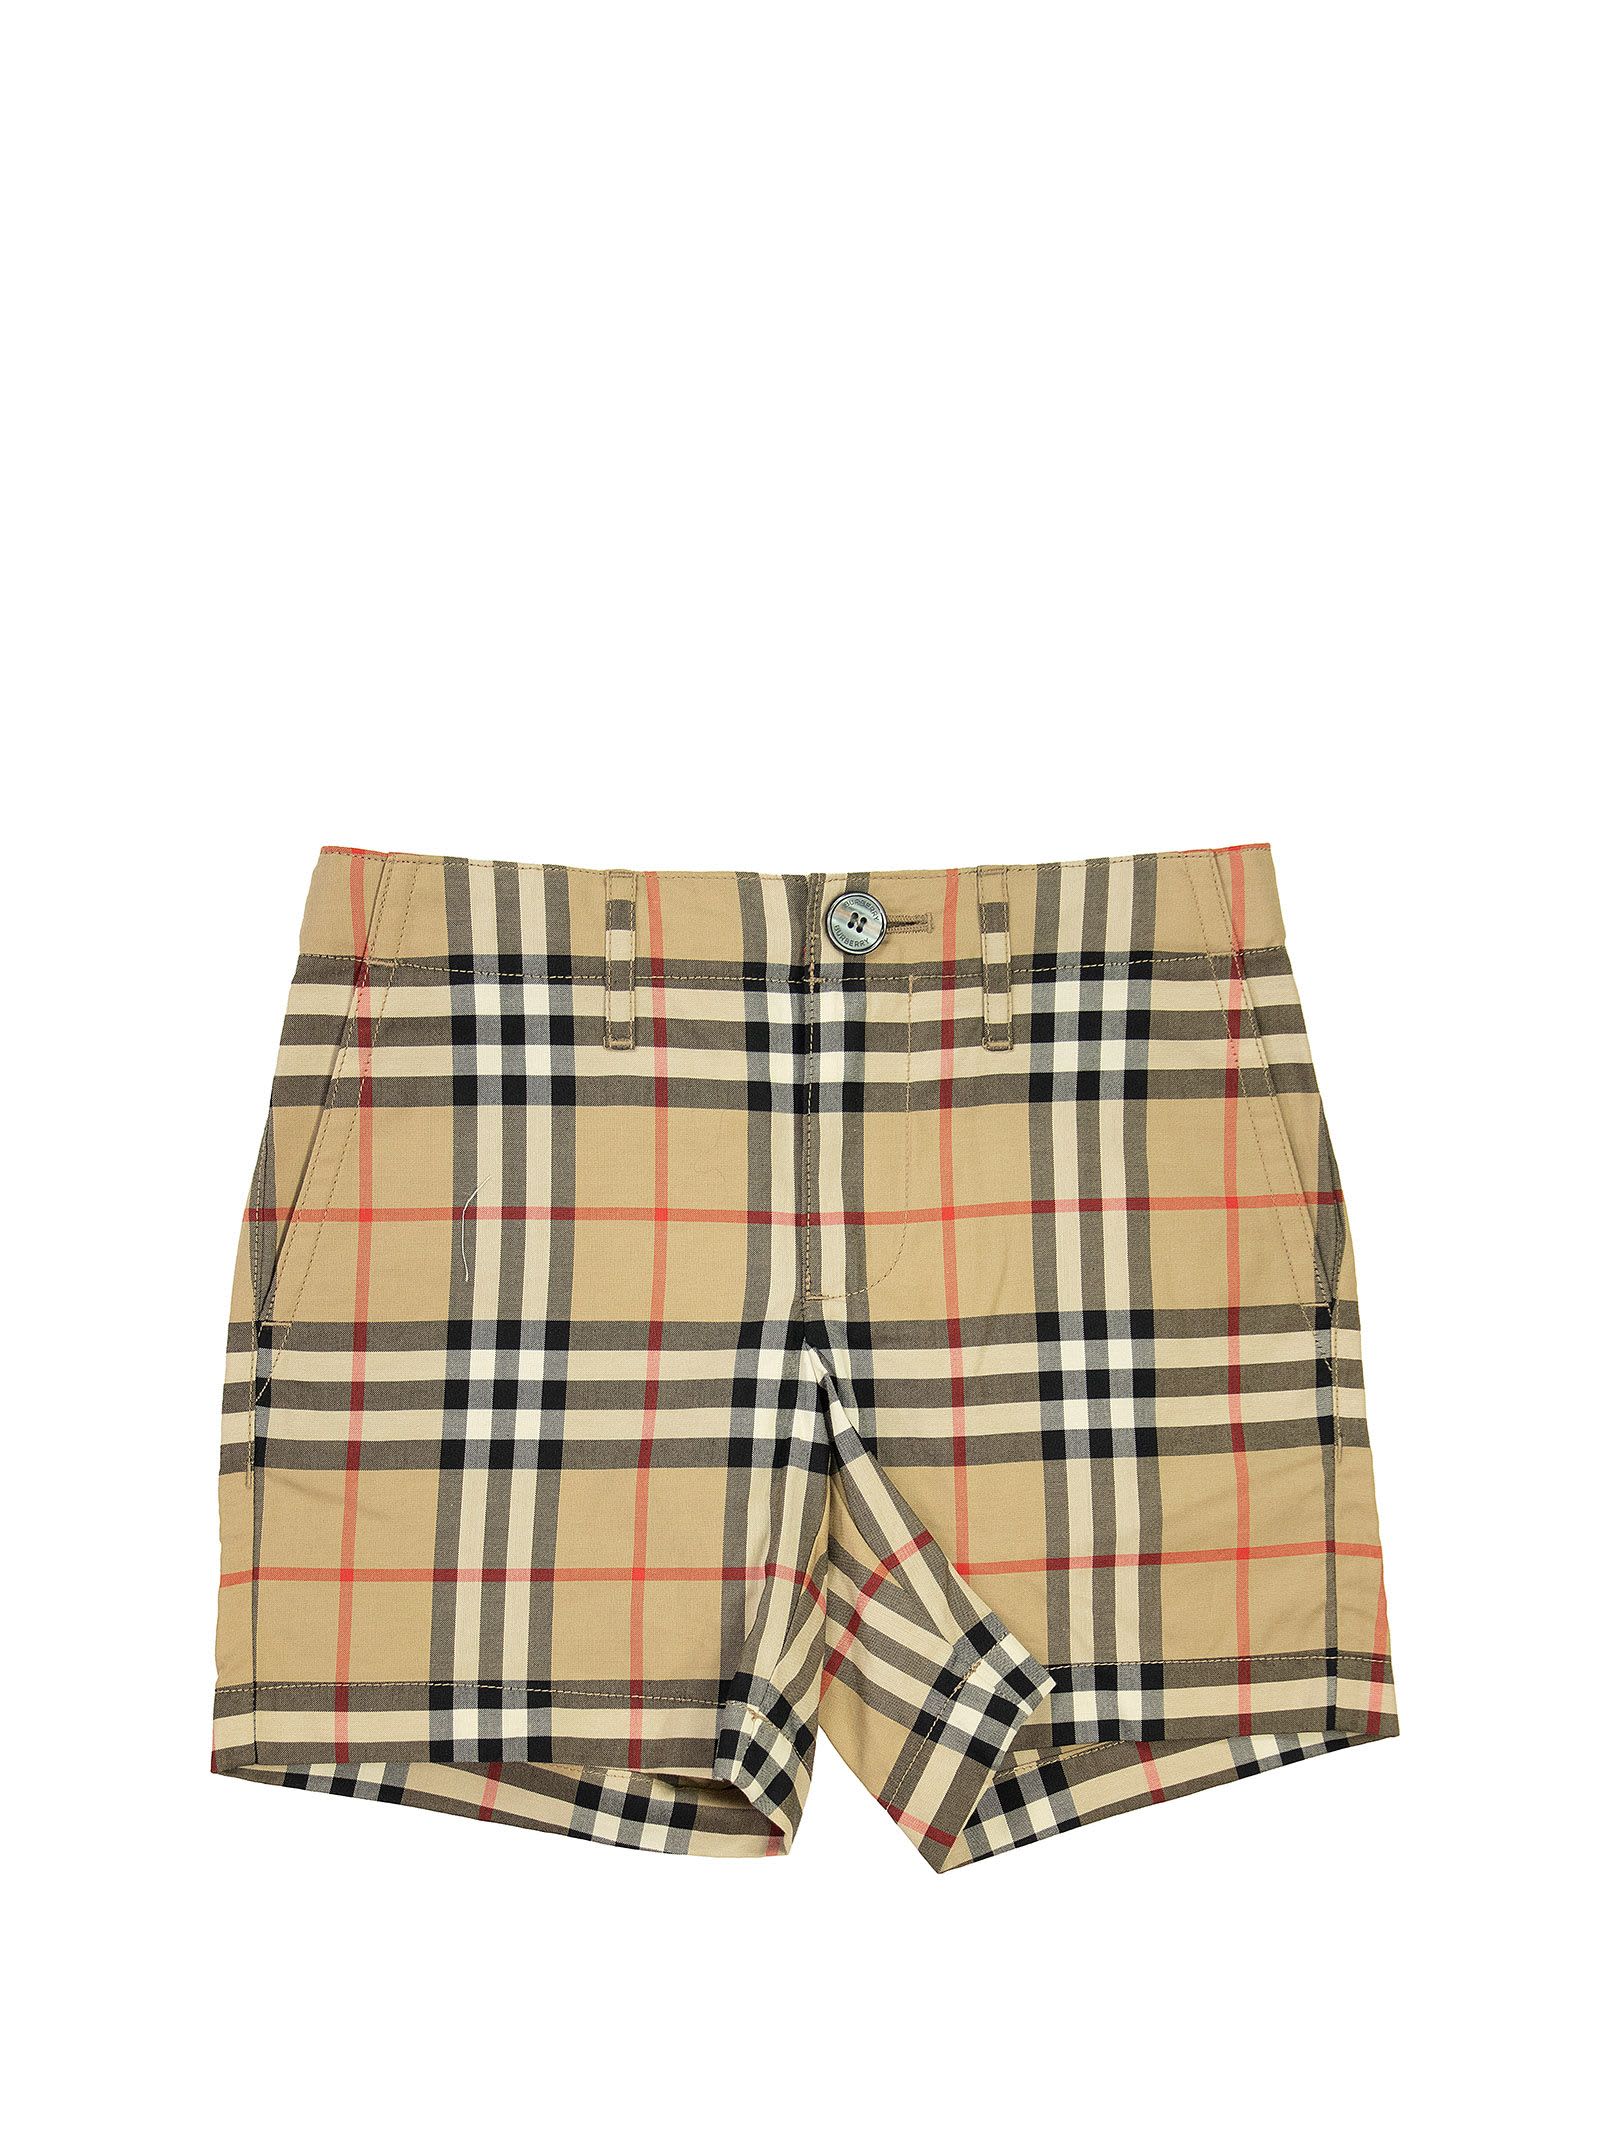 Burberry Tristen - Vintage Check Cotton Tailored Shorts